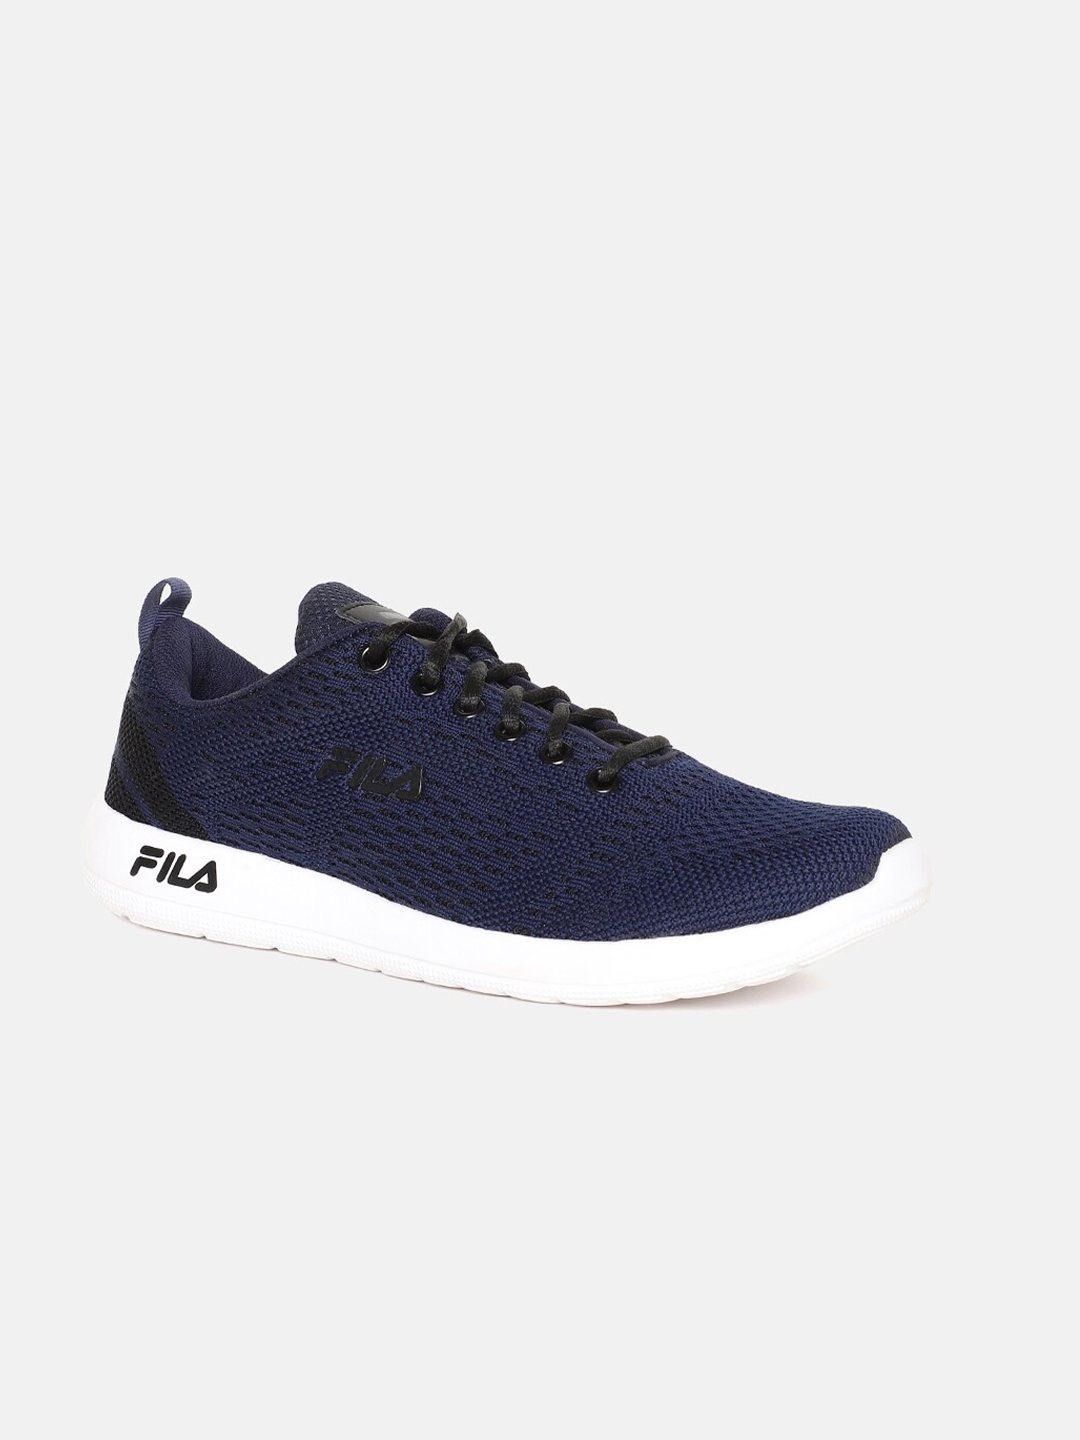 Buy FILA Men Navy Blue Mesh Running Shoes - Sports Shoes for Men ...